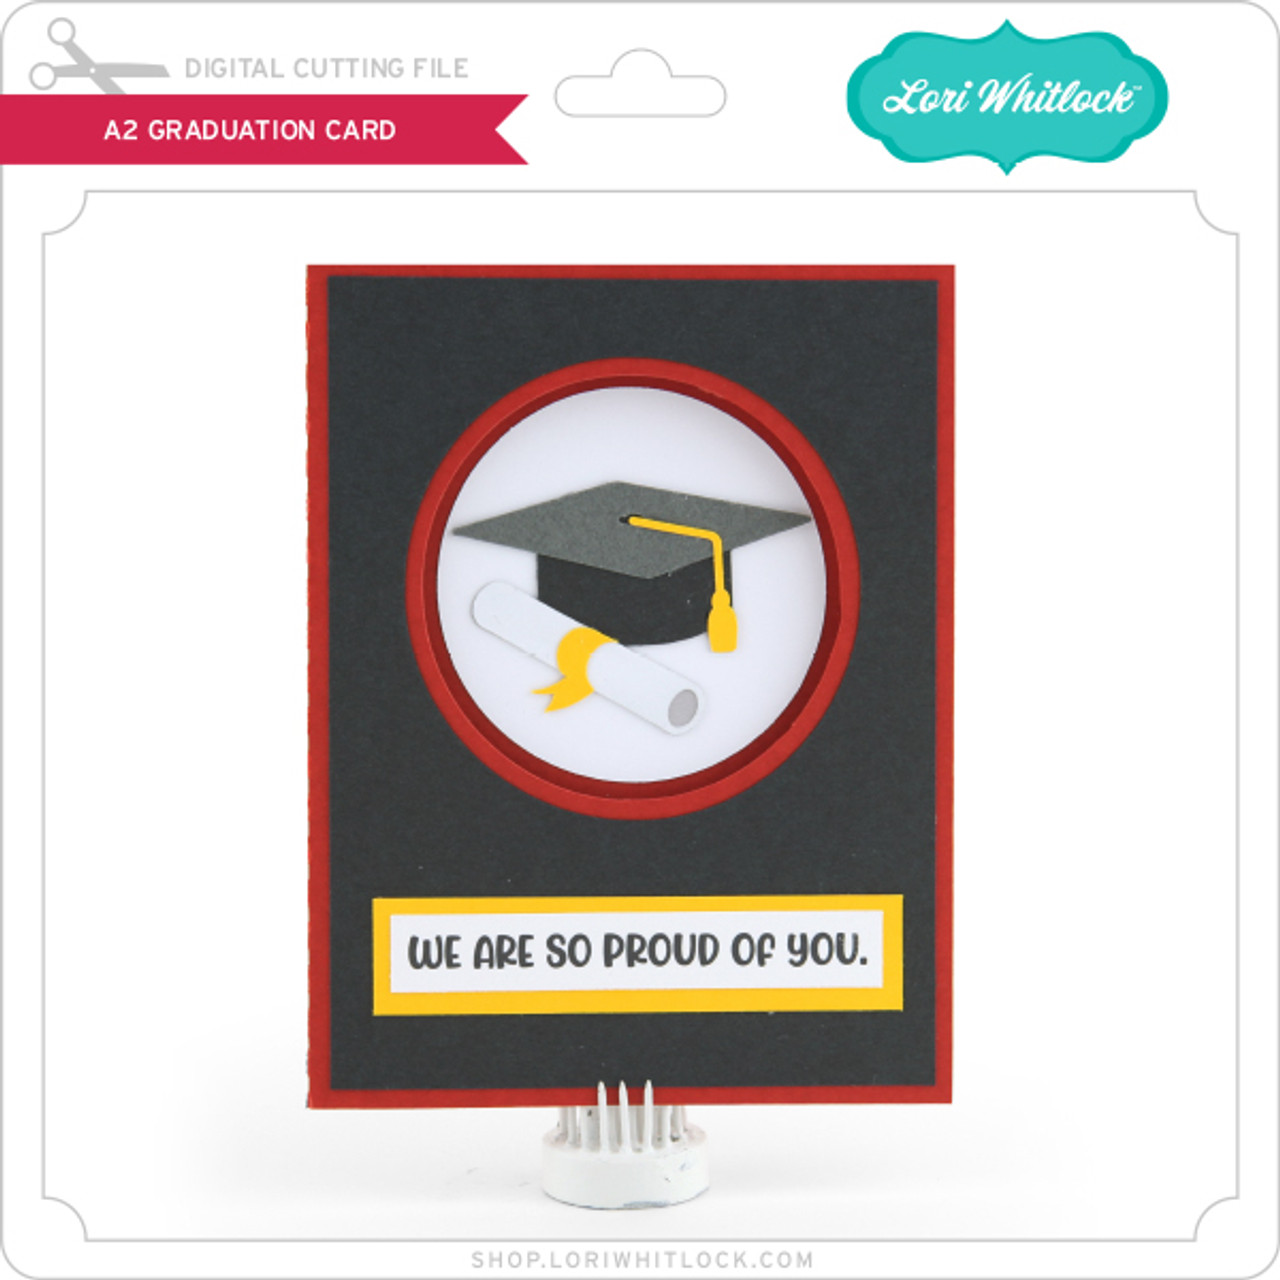 Graduation Hat Gift Card Holder - Lori Whitlock's SVG Shop